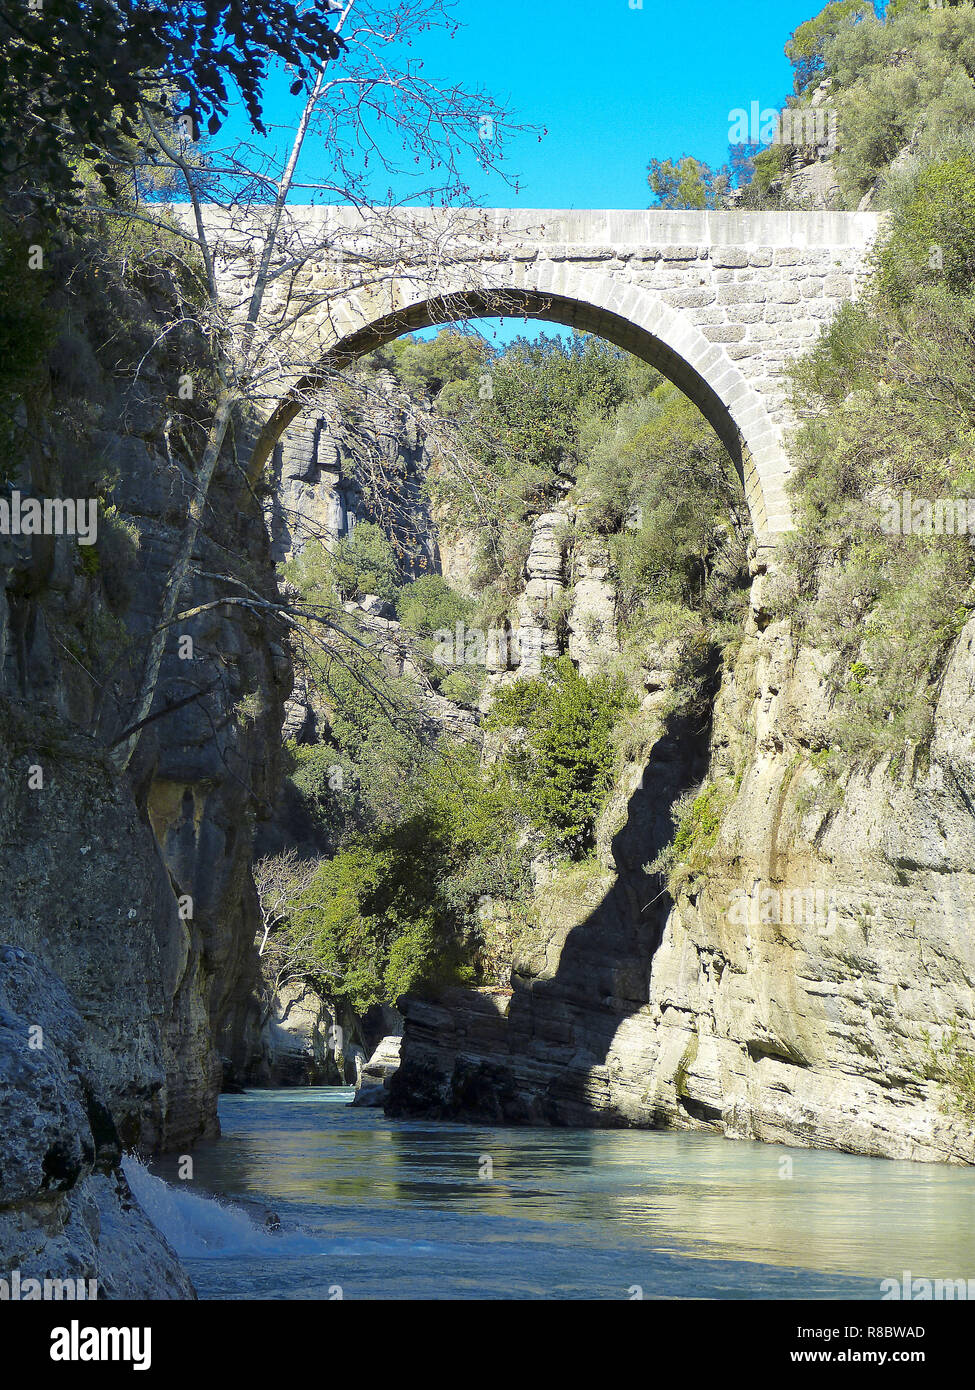 Antique Oluk Bridge across Kopru Irmagi creek in Koprulu Kanyon national park in Turkey. Stock Photo